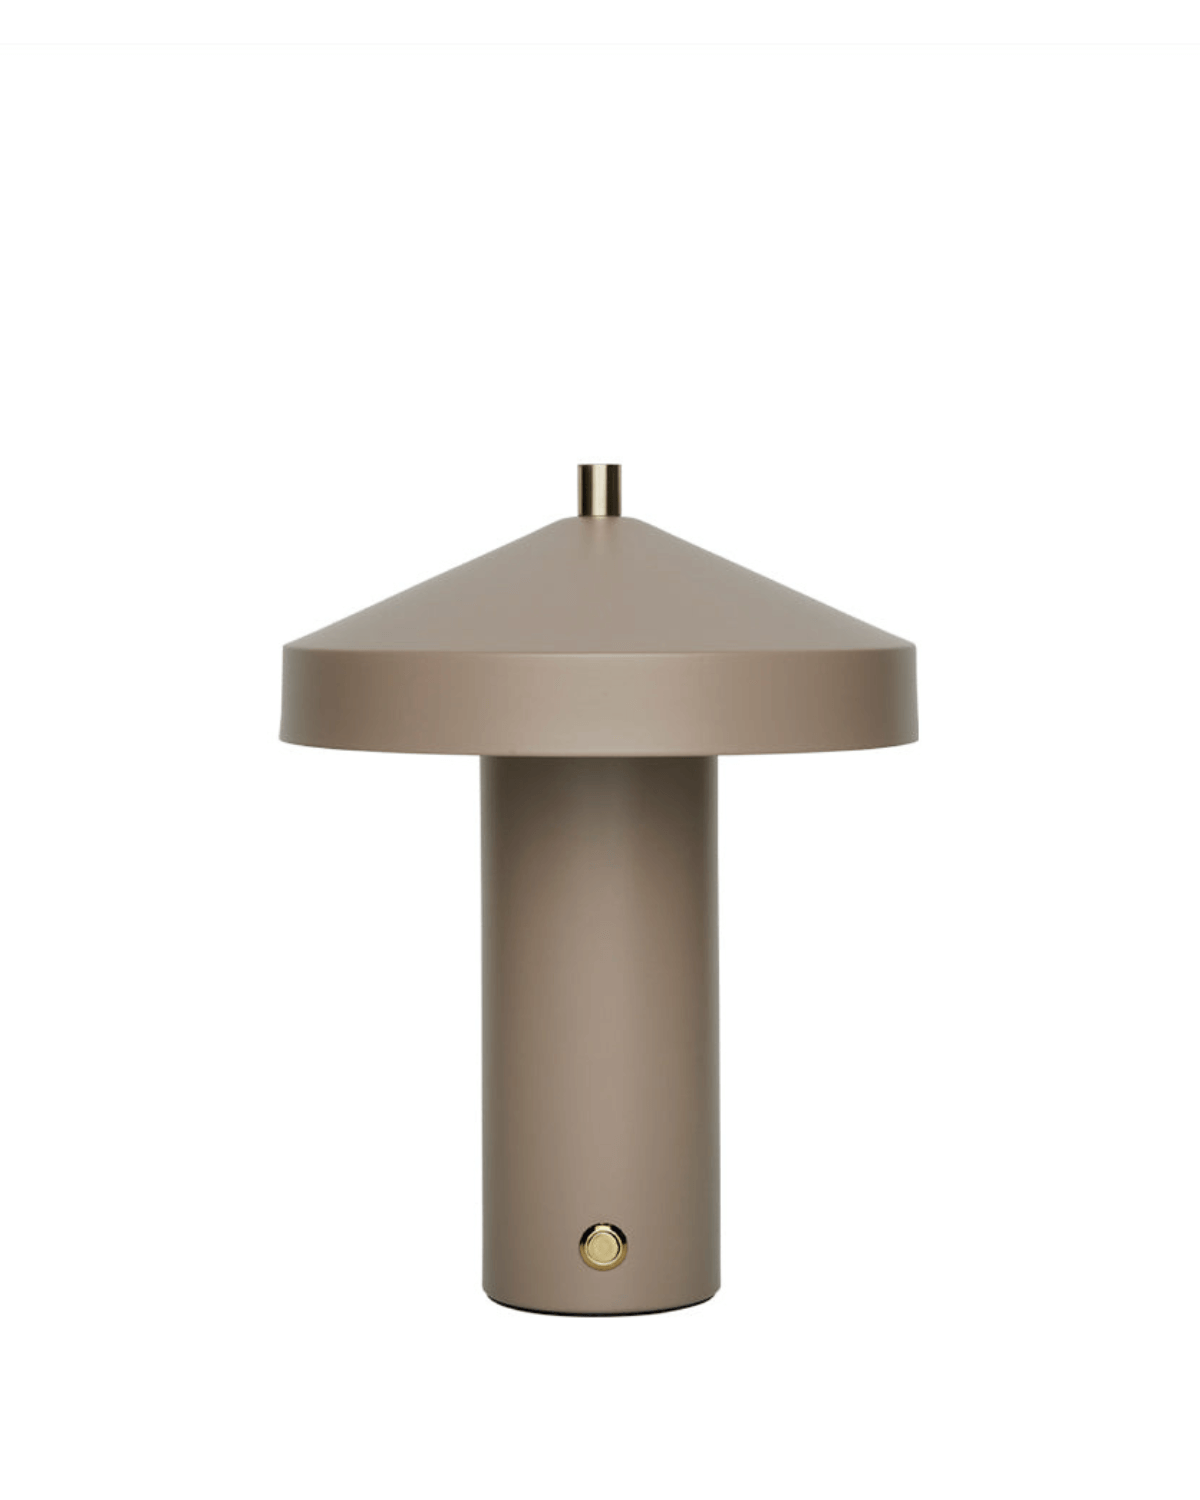 Bordlampe, Hatto, LED Lampe, Clay, Sandfarvet, OYOY Design Living